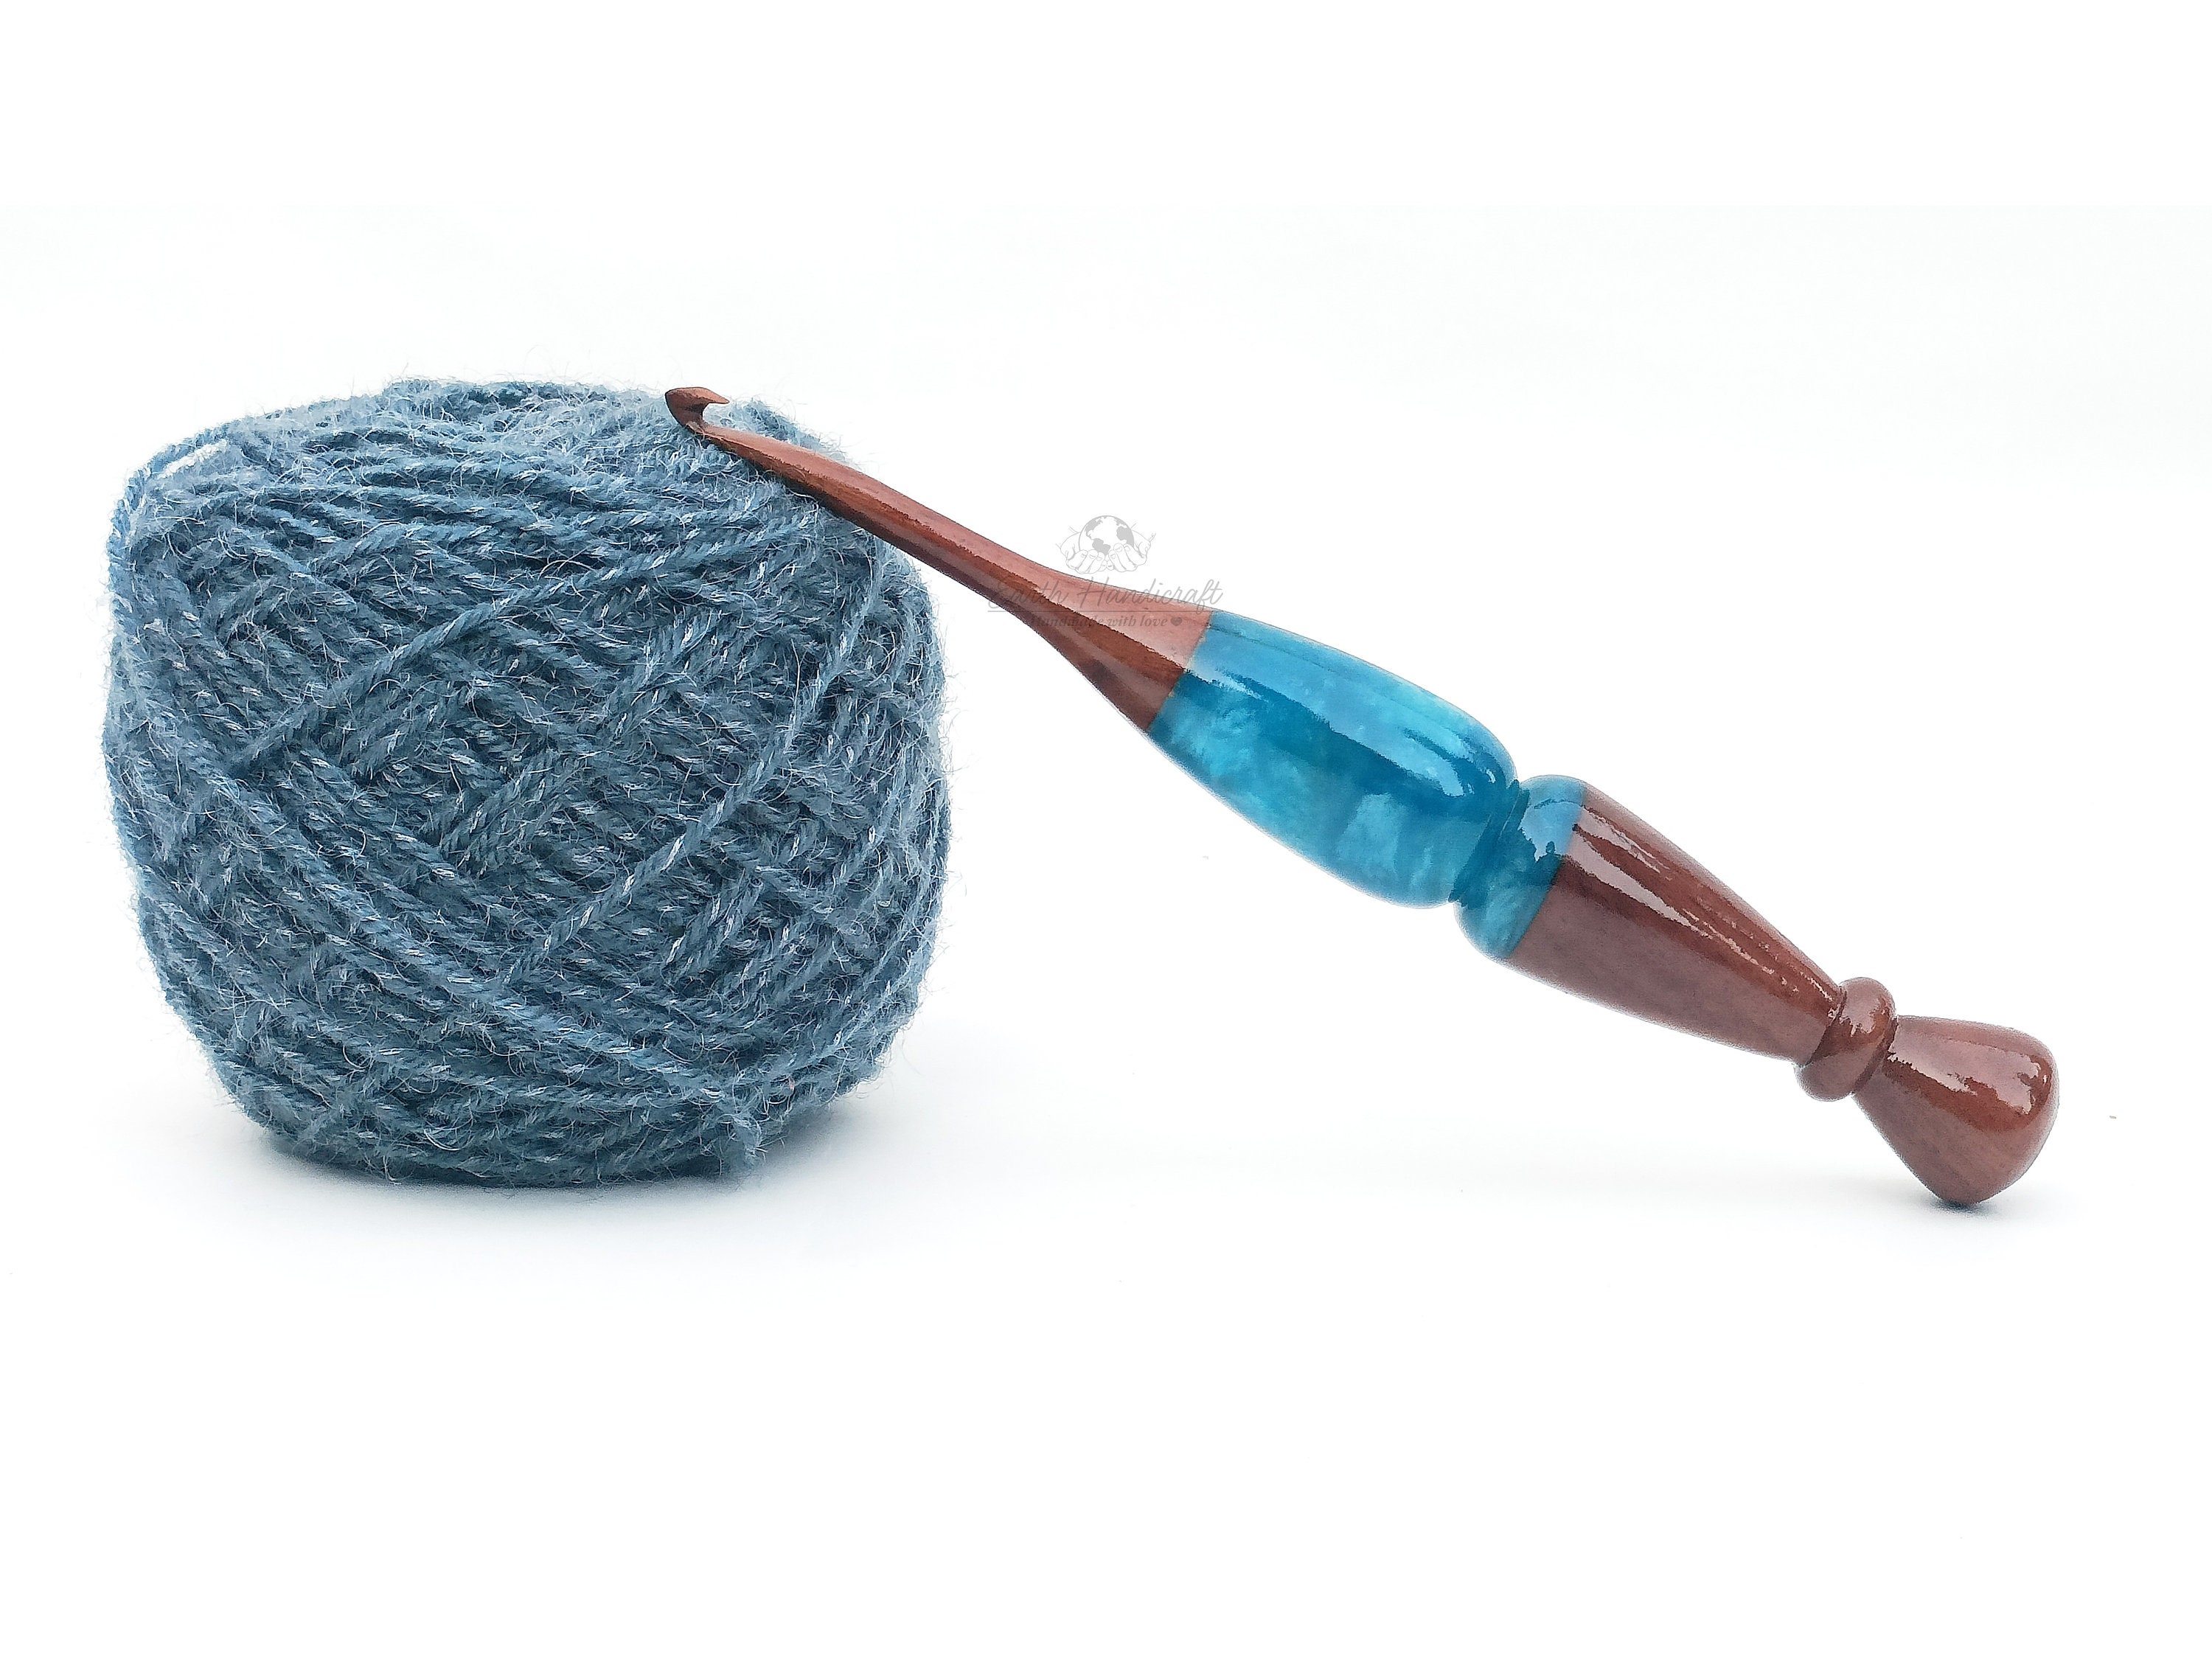  Vodiye Crochet Hooks, Professional Extra Long 9mm Crochet Hook,  Ergonomic Handle Crochet Hooks Set, Crochet Needle for Beginners and  Experienced Crochet Hooks Lovers